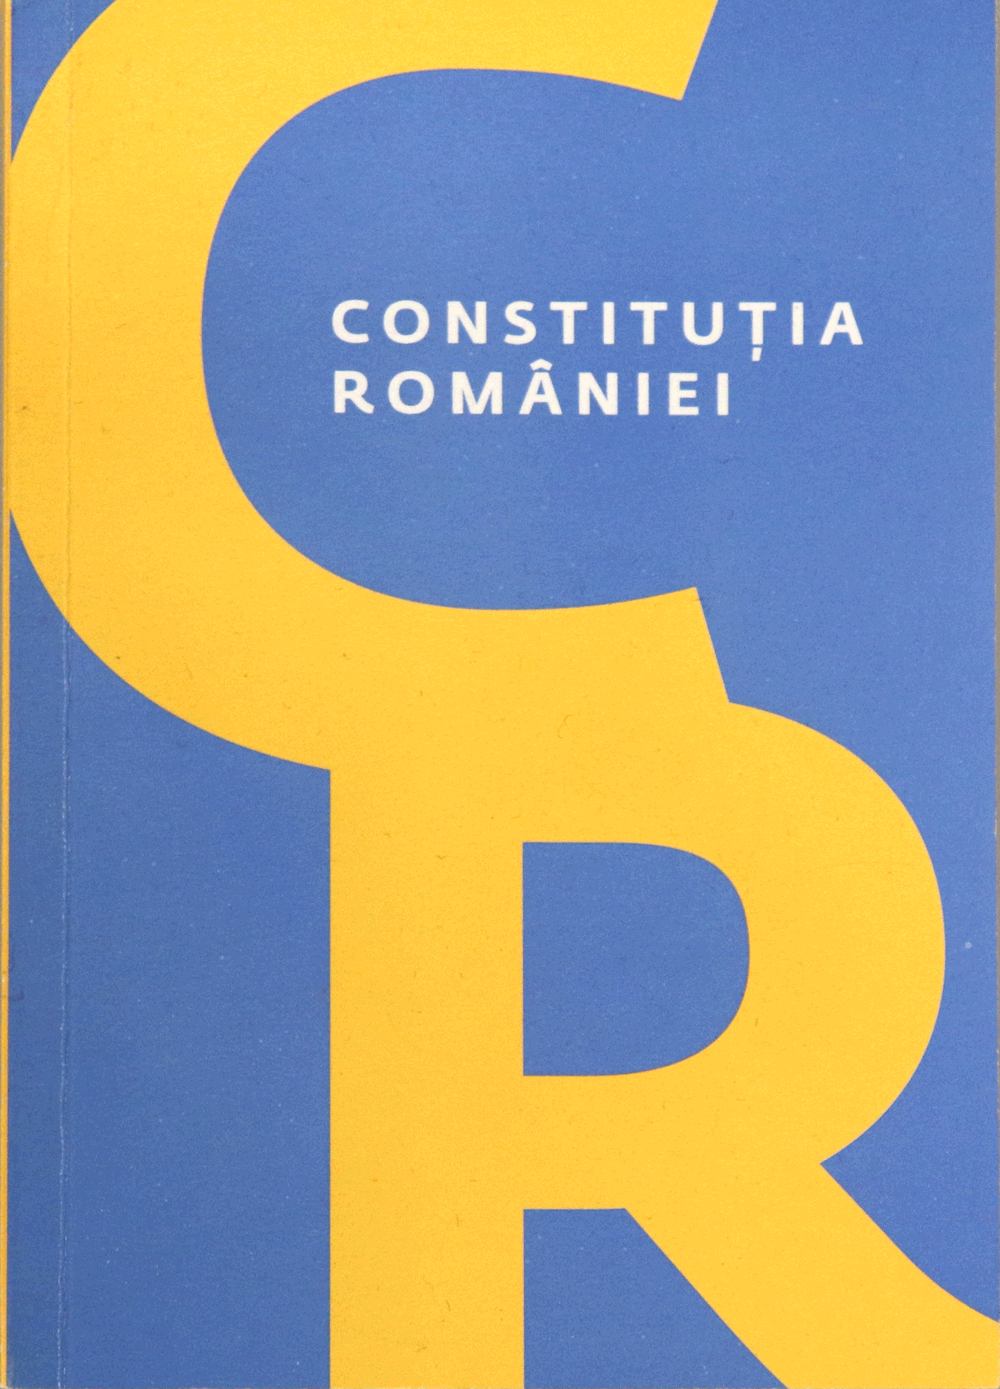 Constitutia Romaniei - pocket edition by Funky Citizens